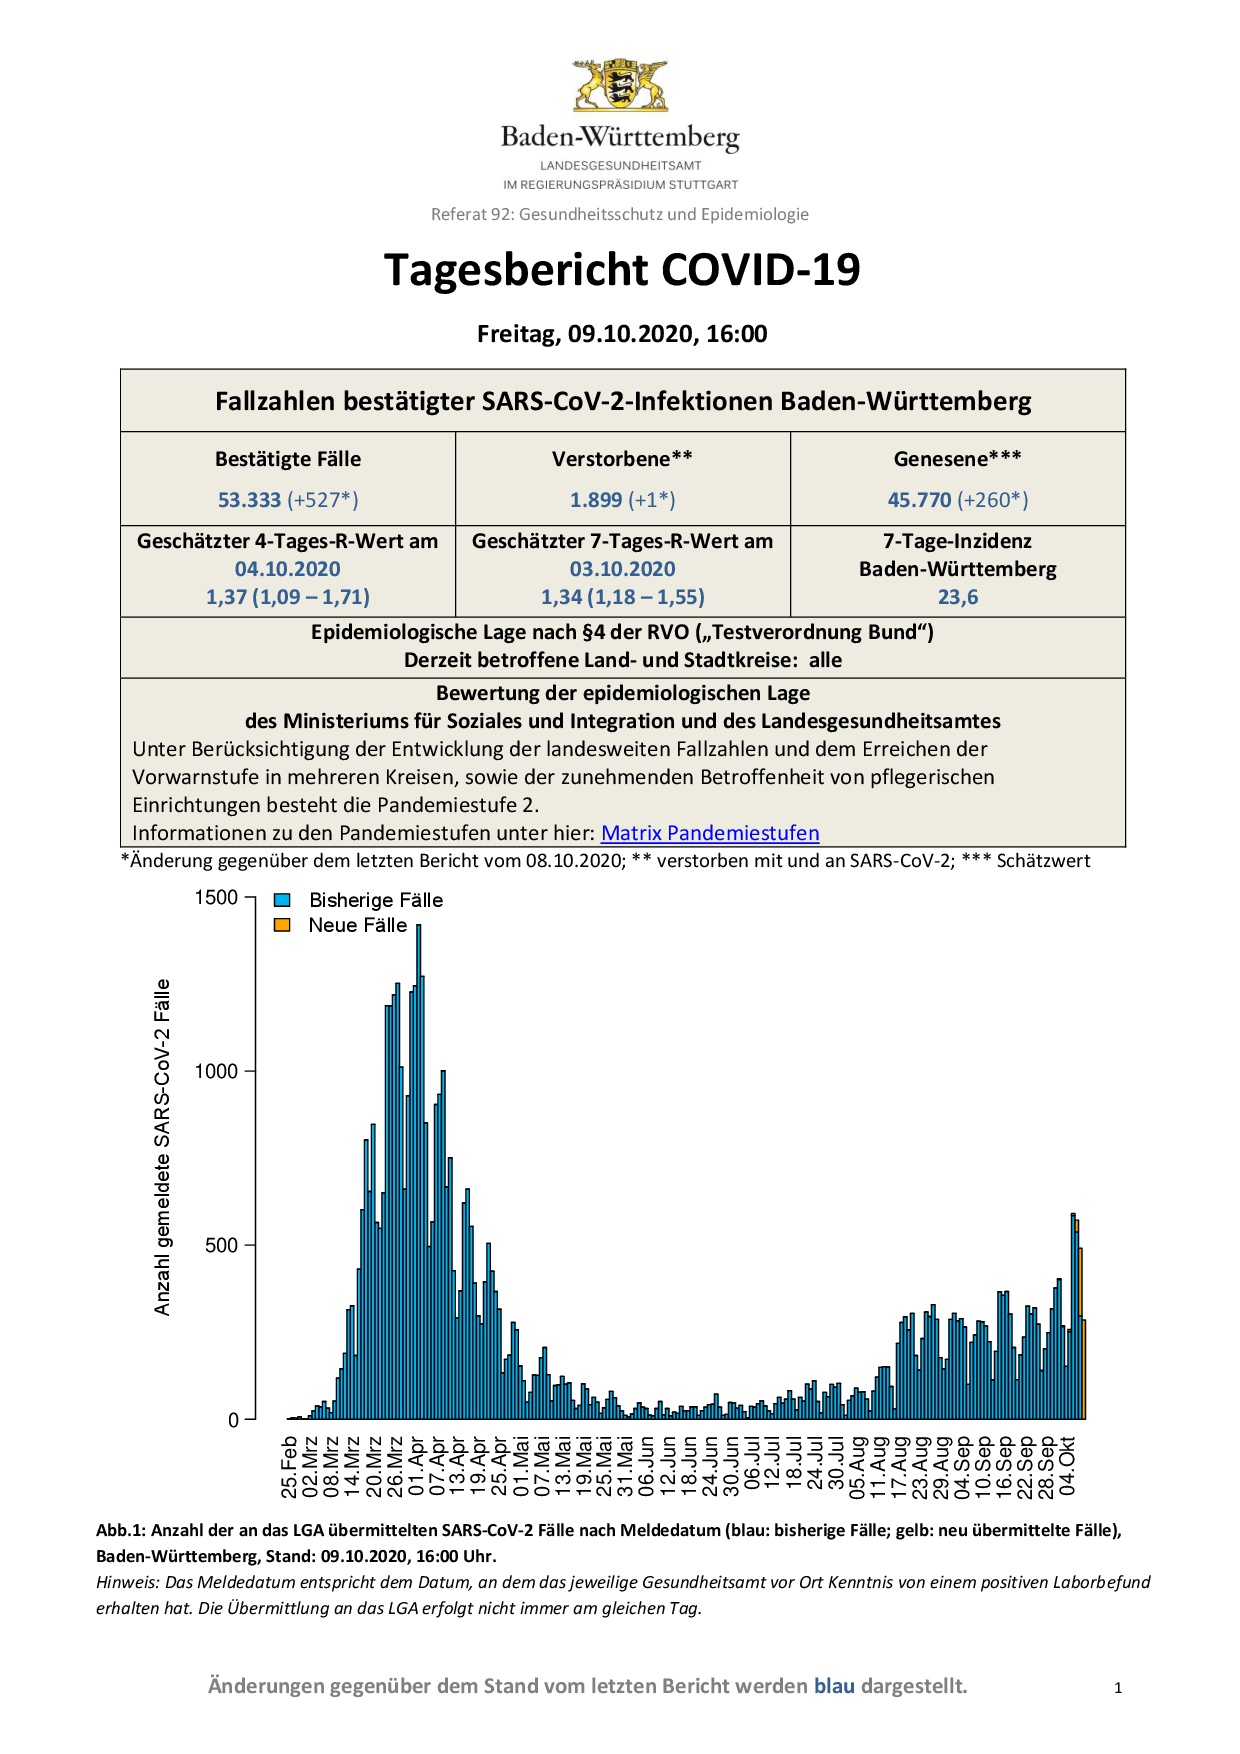 COVID-19 Tagesbericht (09.10.2020) des Landesgesundheitsamts Baden-Württemberg